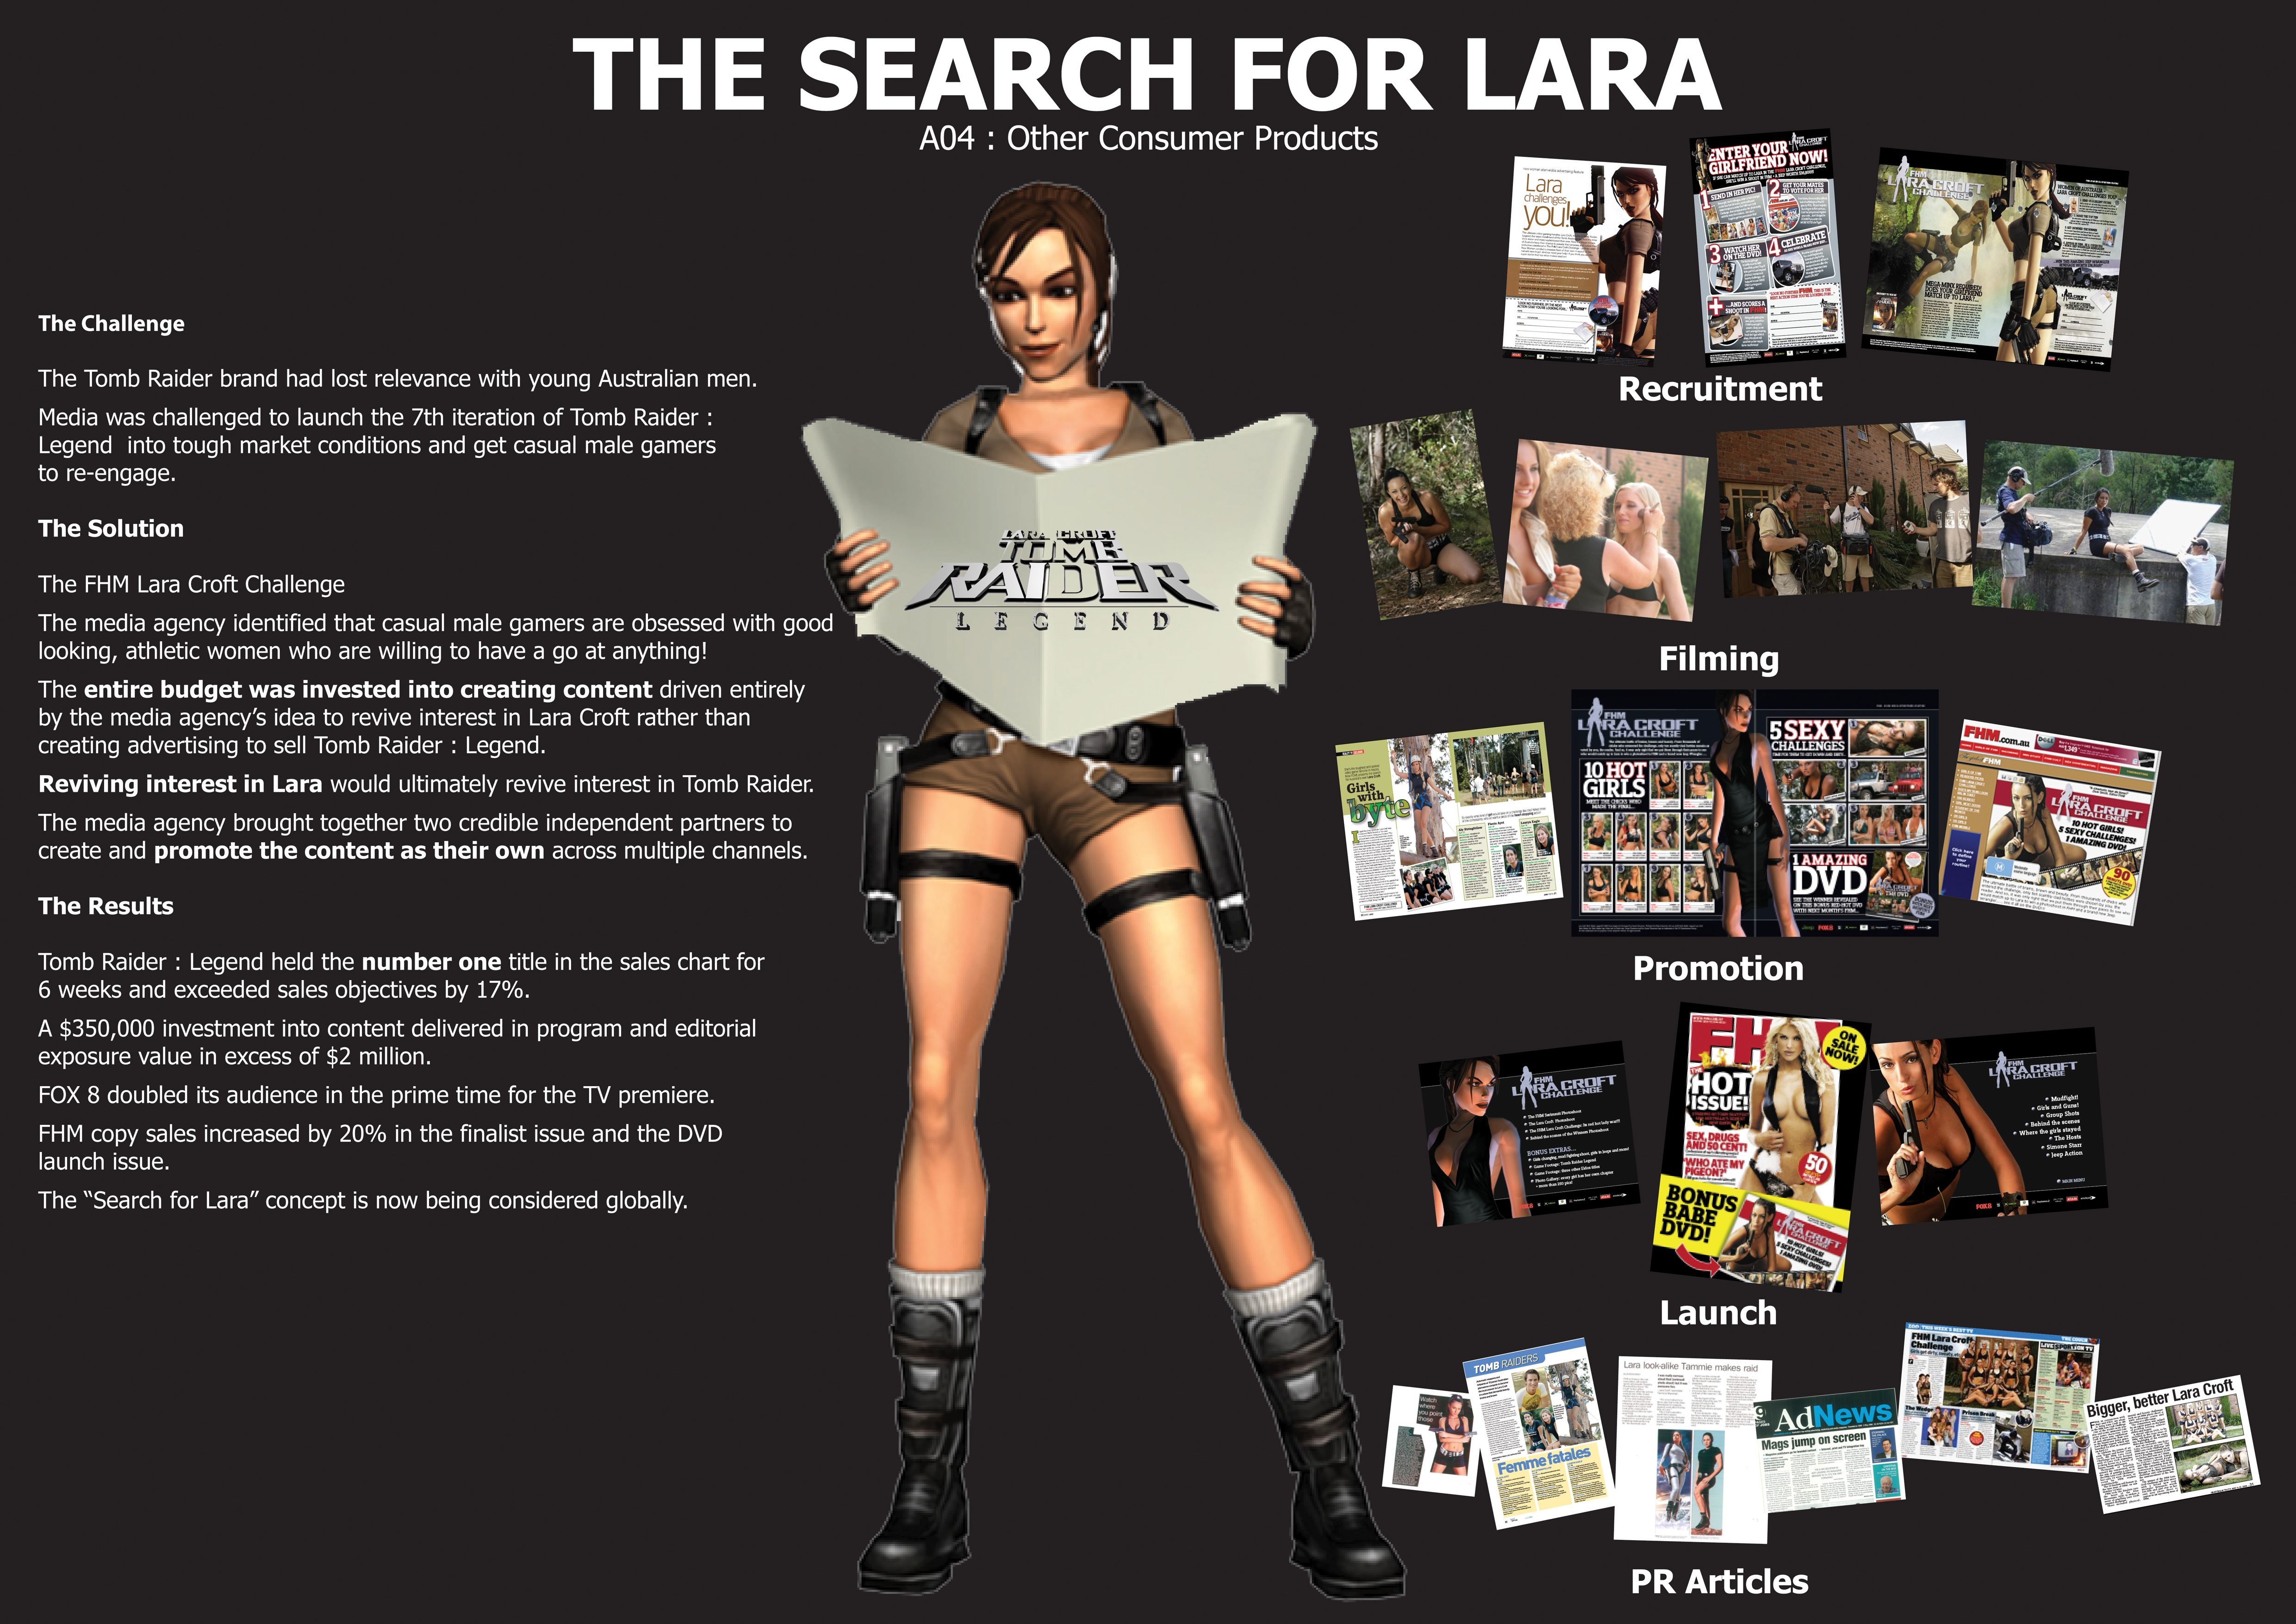 SEARCH FOR LARA